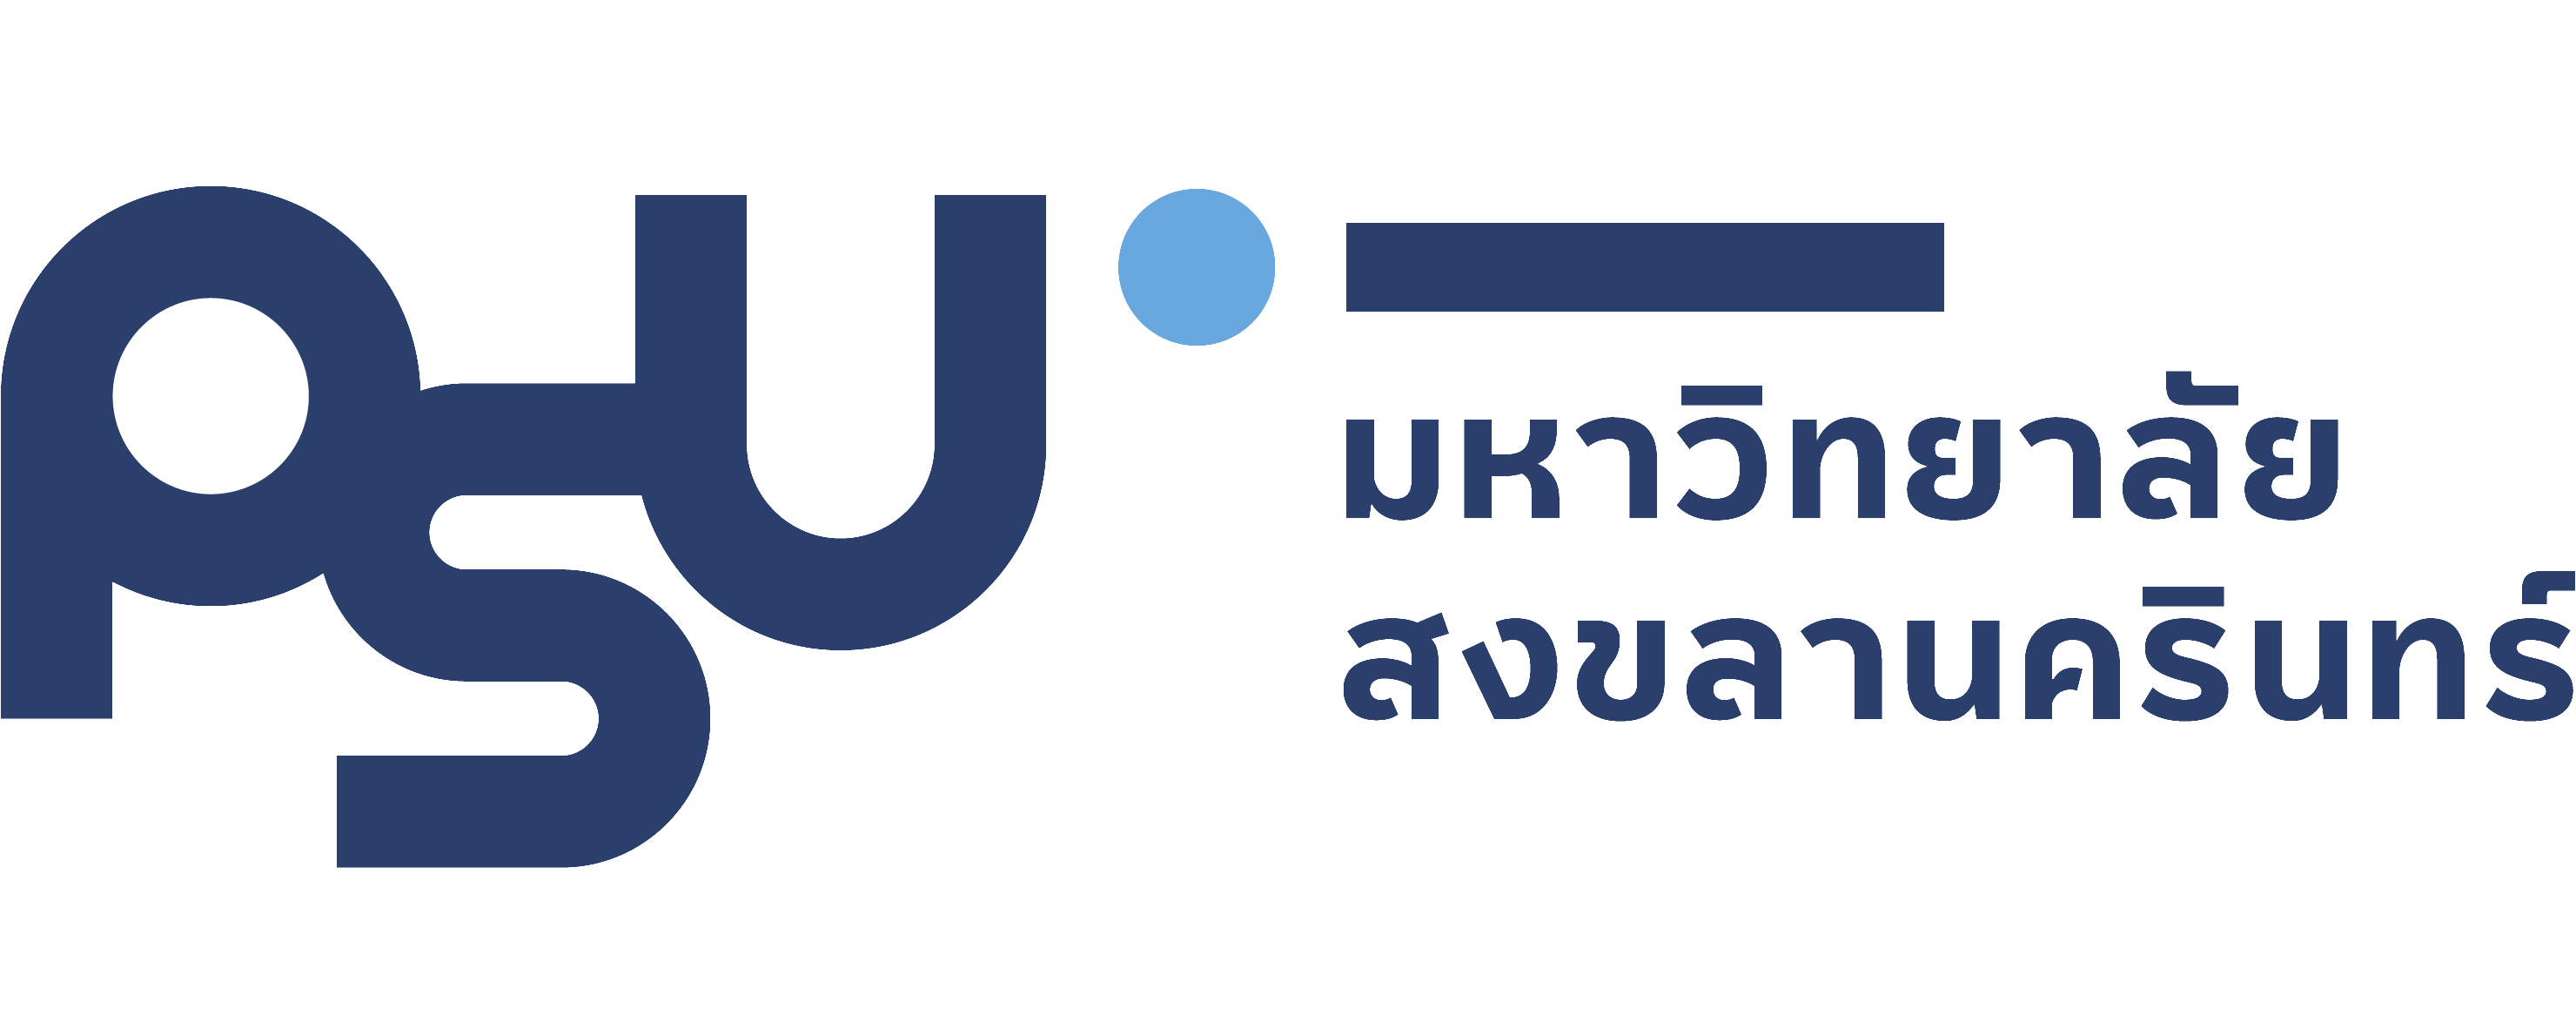 psu logo